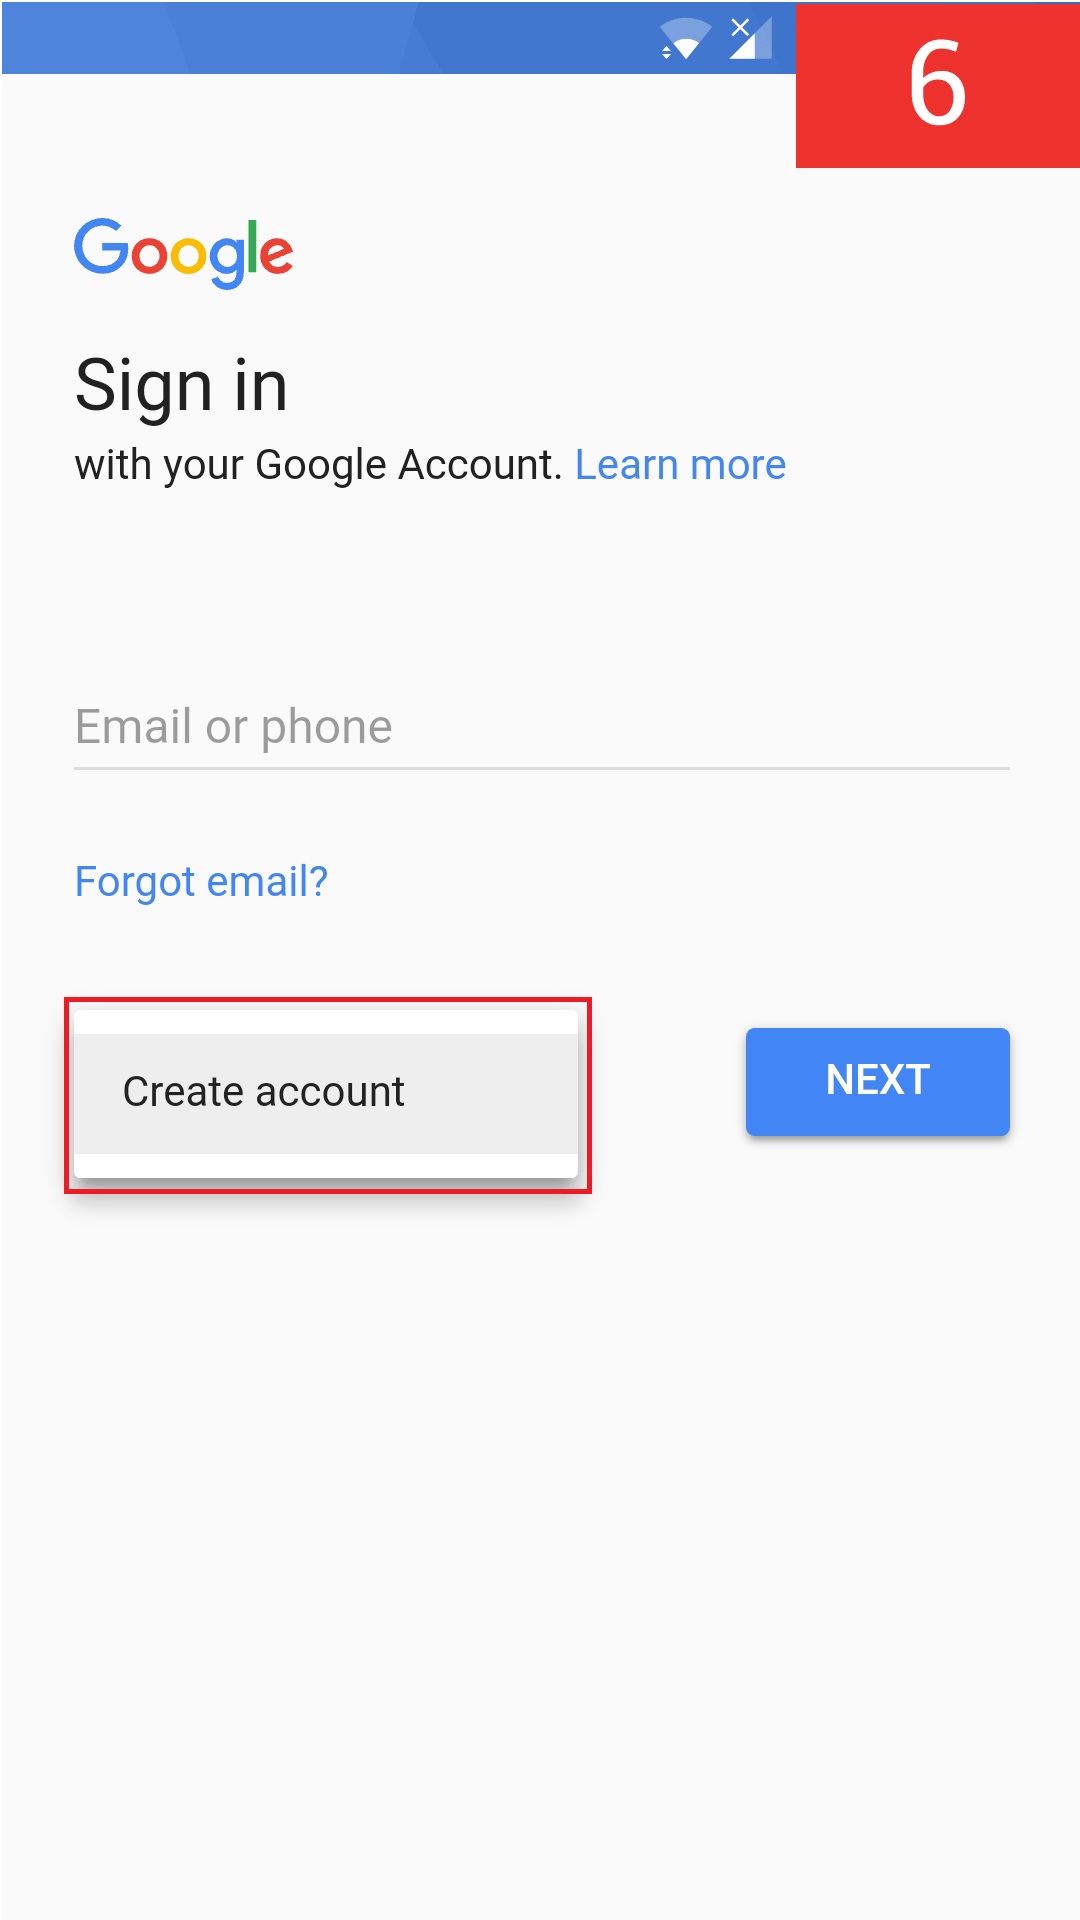 create account button